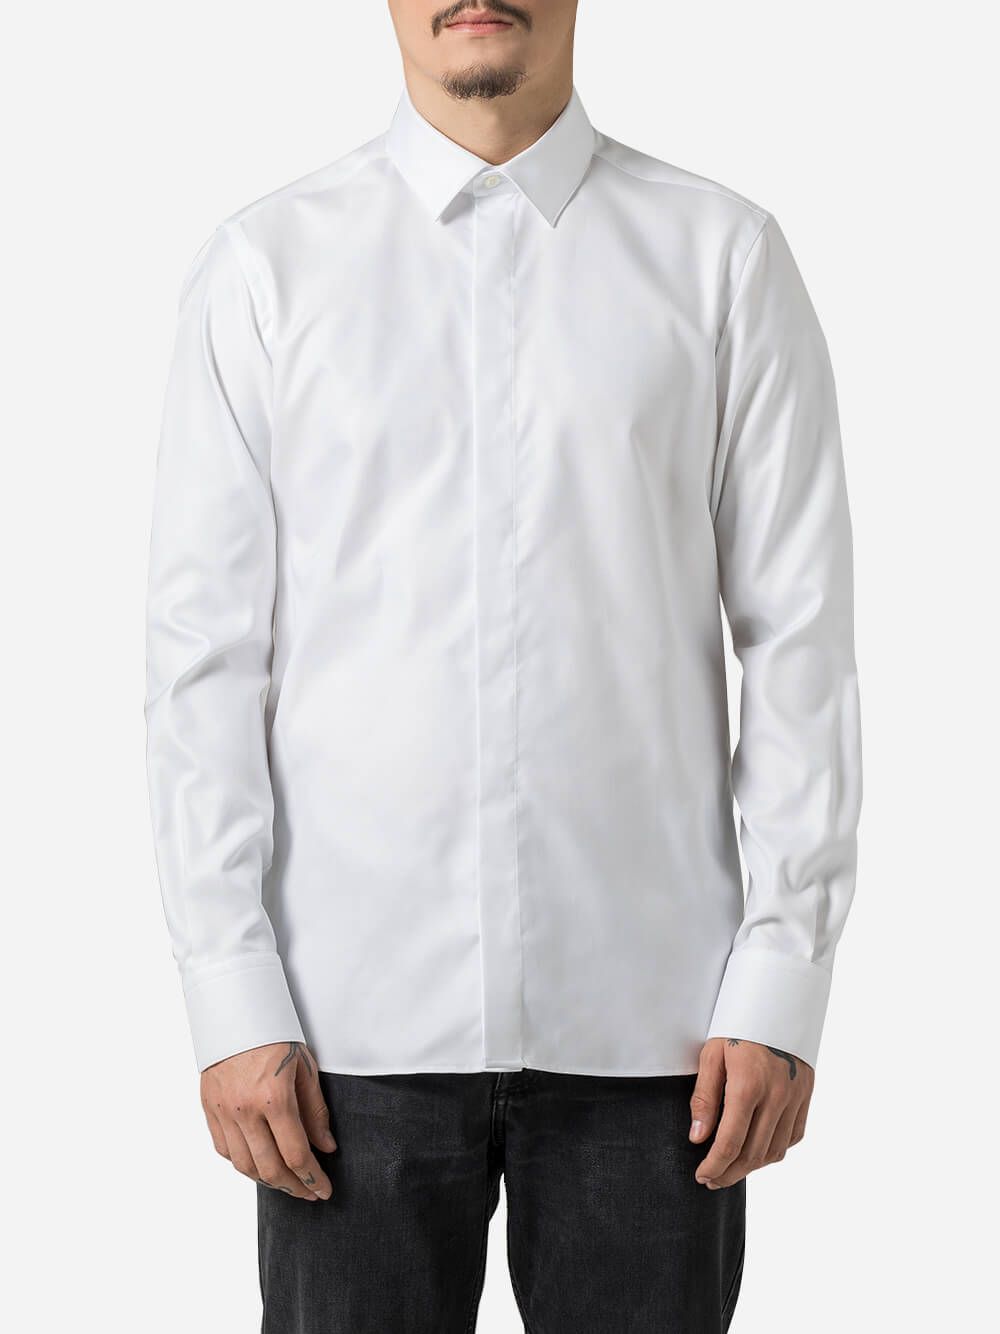 Money White Shirt | The Board